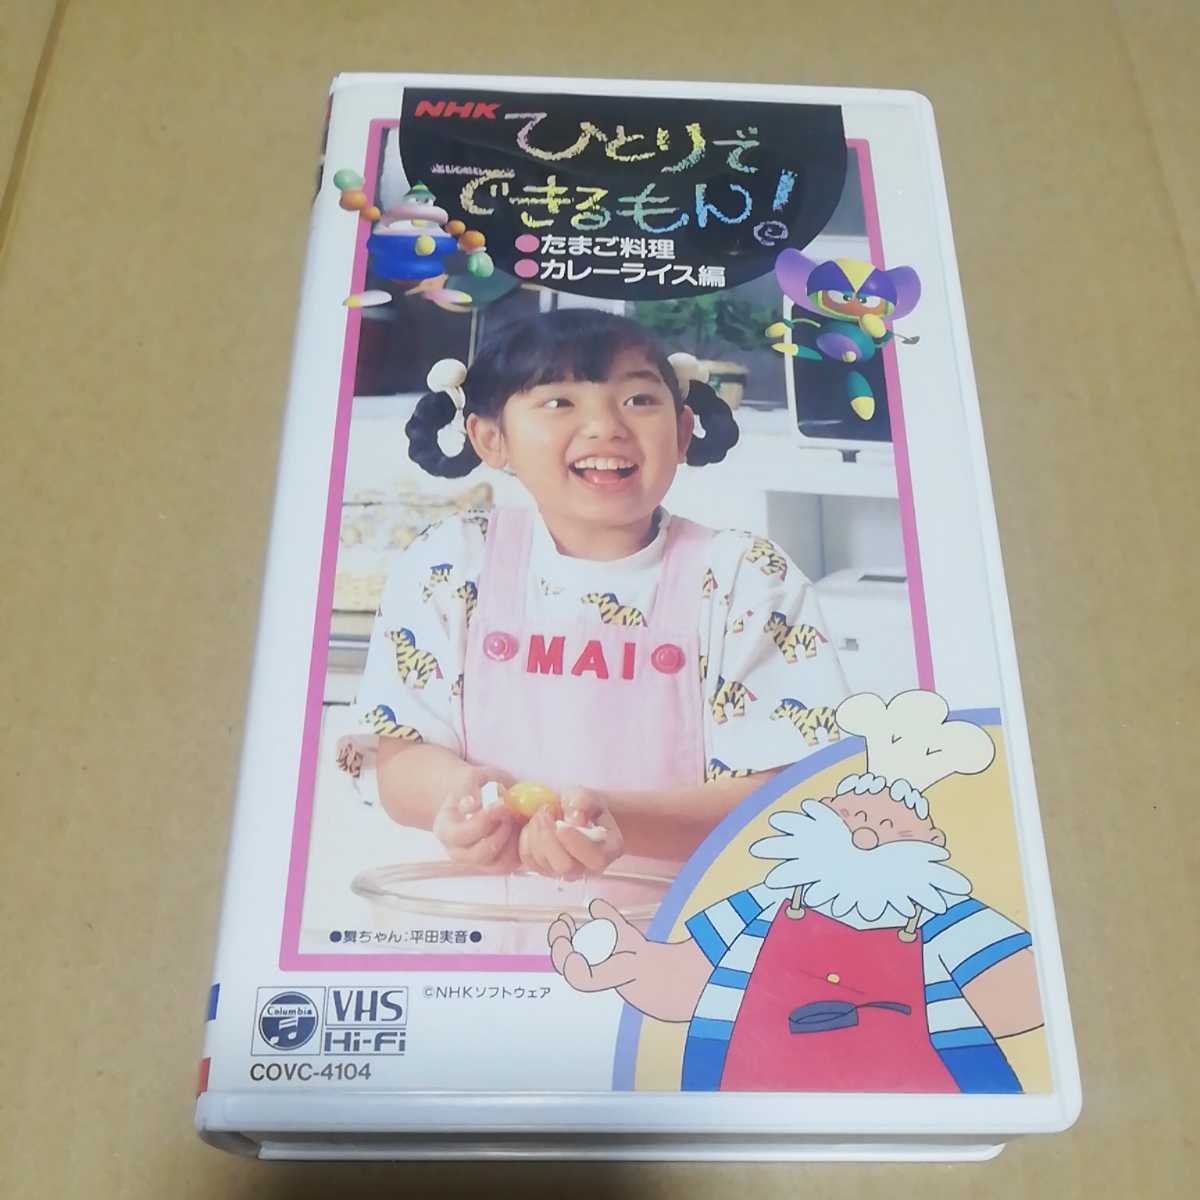 VHS NHK ひとりでできるもん！ たまご料理・カレーライス編 ◆ 平田美音 舞ちゃん ※ソフトケースなしならネコポス発送可能です。